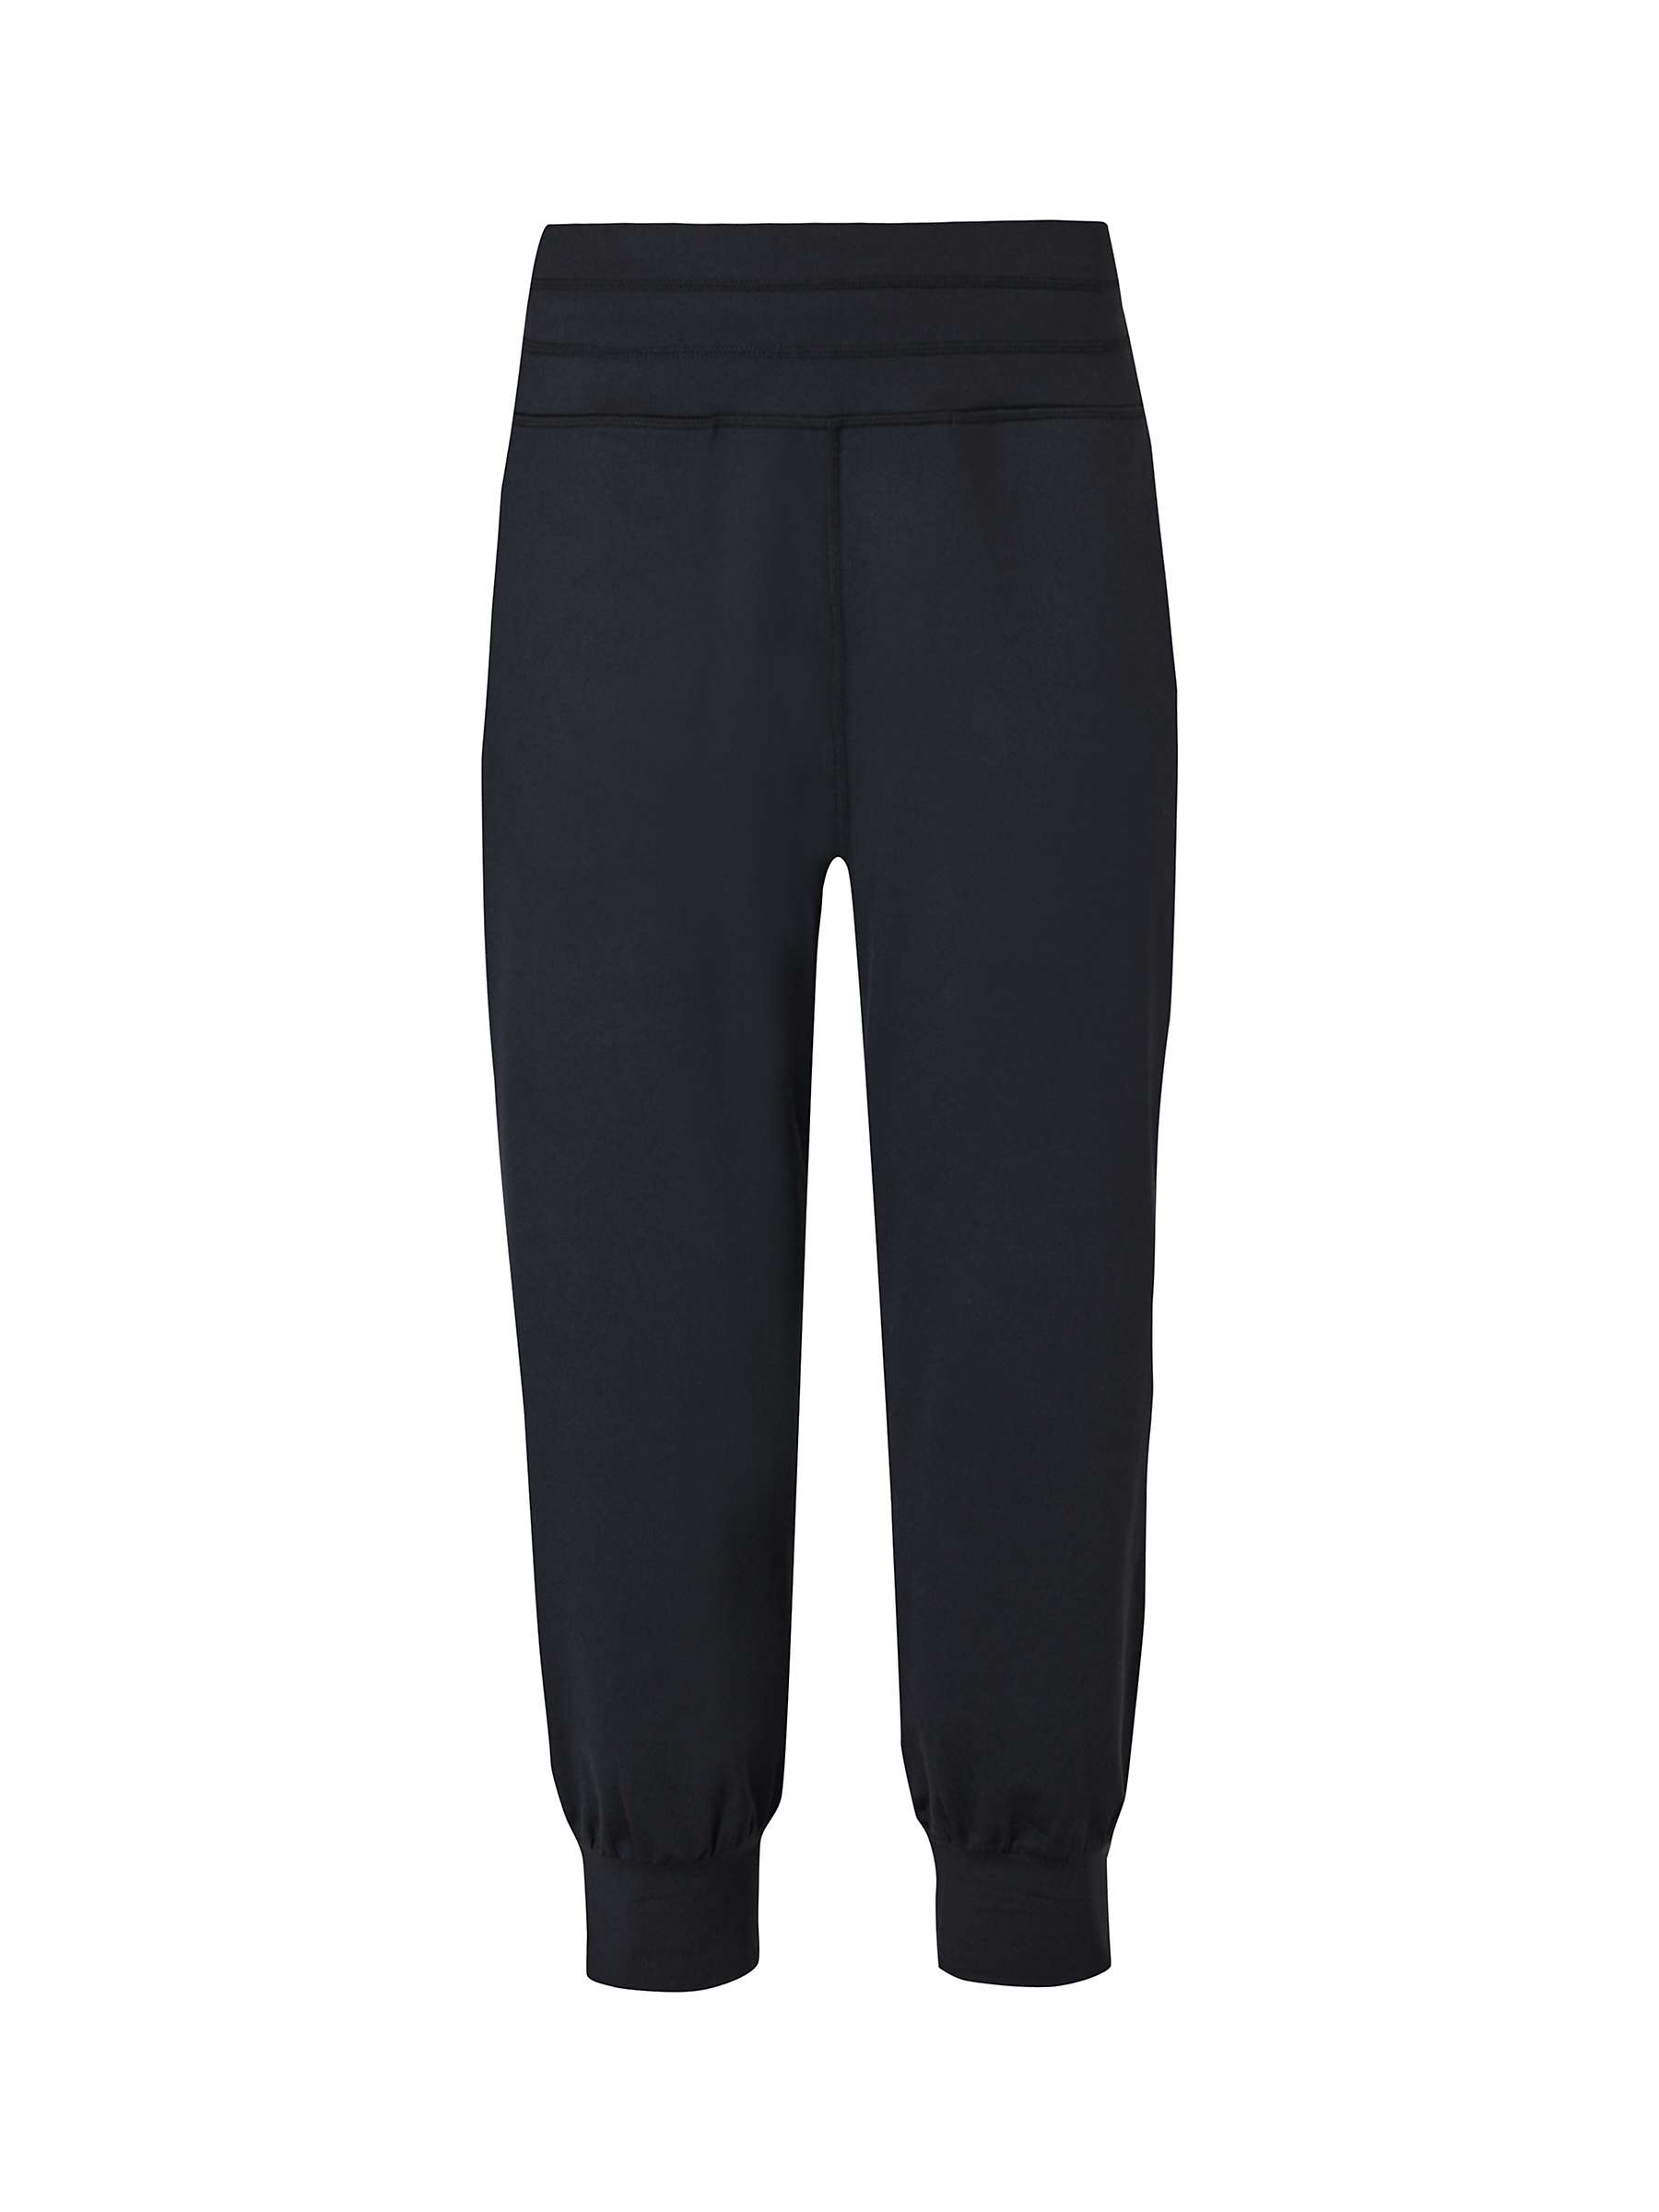 Buy Sweaty Betty Gaia Yoga Capri Trousers, Black Online at johnlewis.com